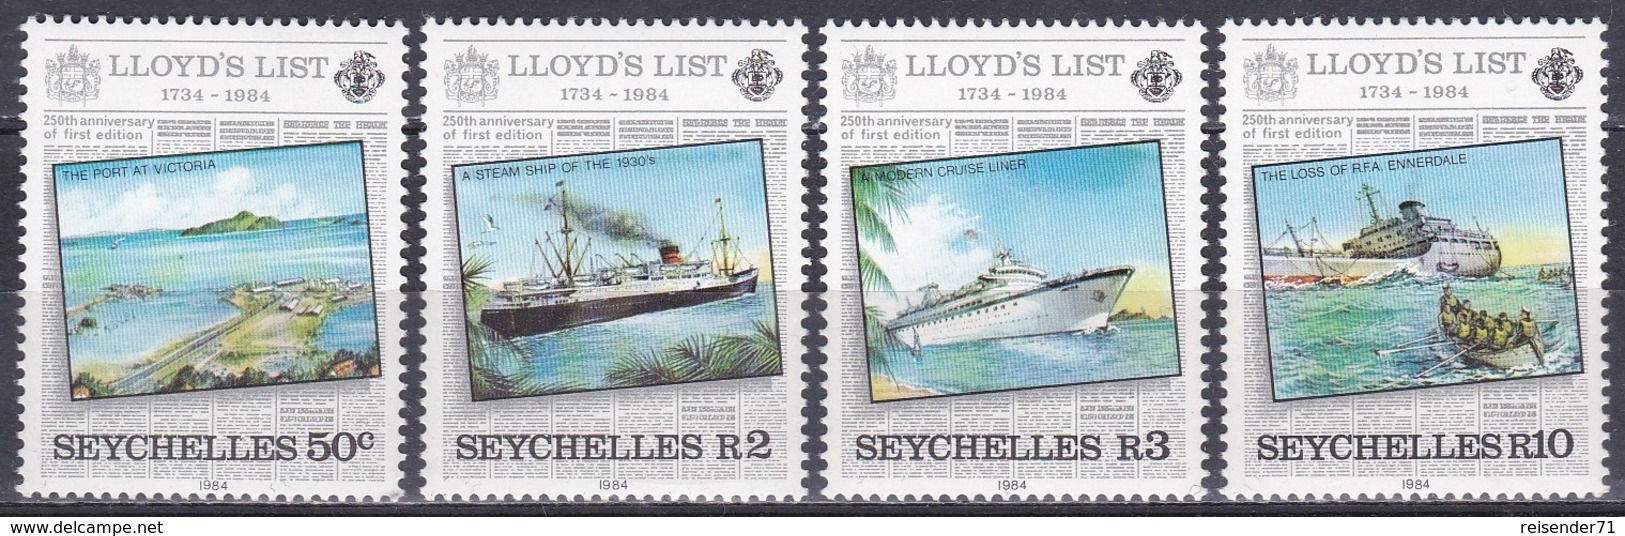 Seychellen Seychelles 1984 Transport Seefahrt Seafaring Schiffe Ships Zeitung Newspaper Lloyd's List, Mi. 554-7 ** - Seychellen (1976-...)